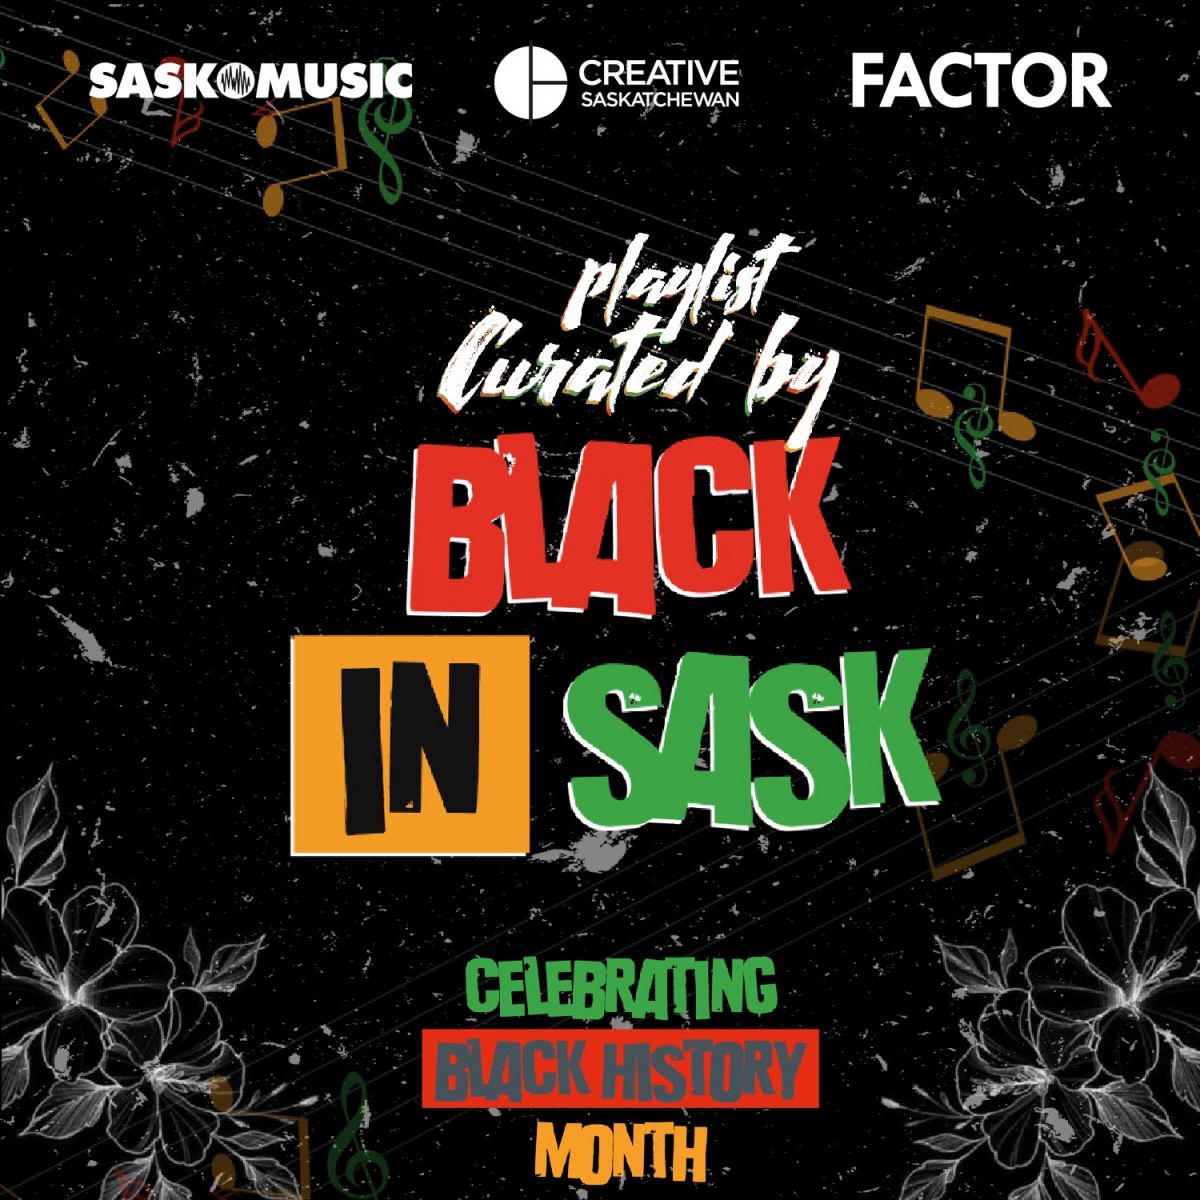 Black History Month - Black In Sask